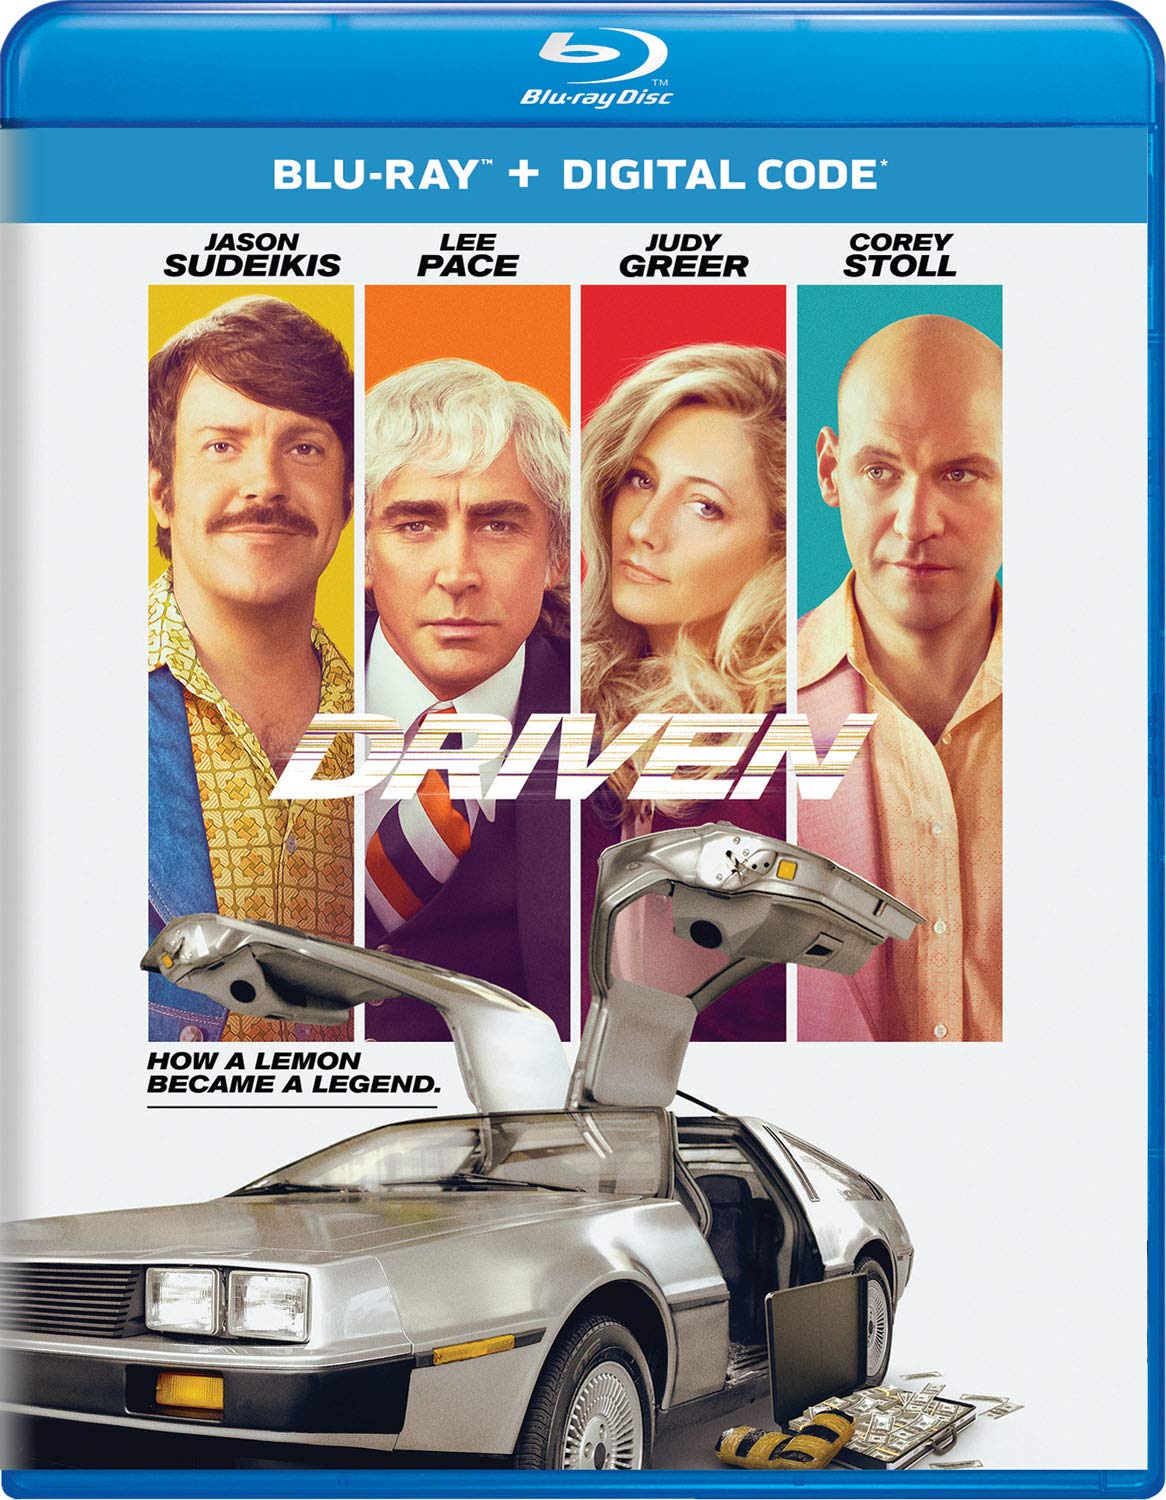 Driven (Blu-ray + Digital HD) - Blu-ray [ 2019 ]  - Thriller Movies On Blu-ray - Movies On GRUV